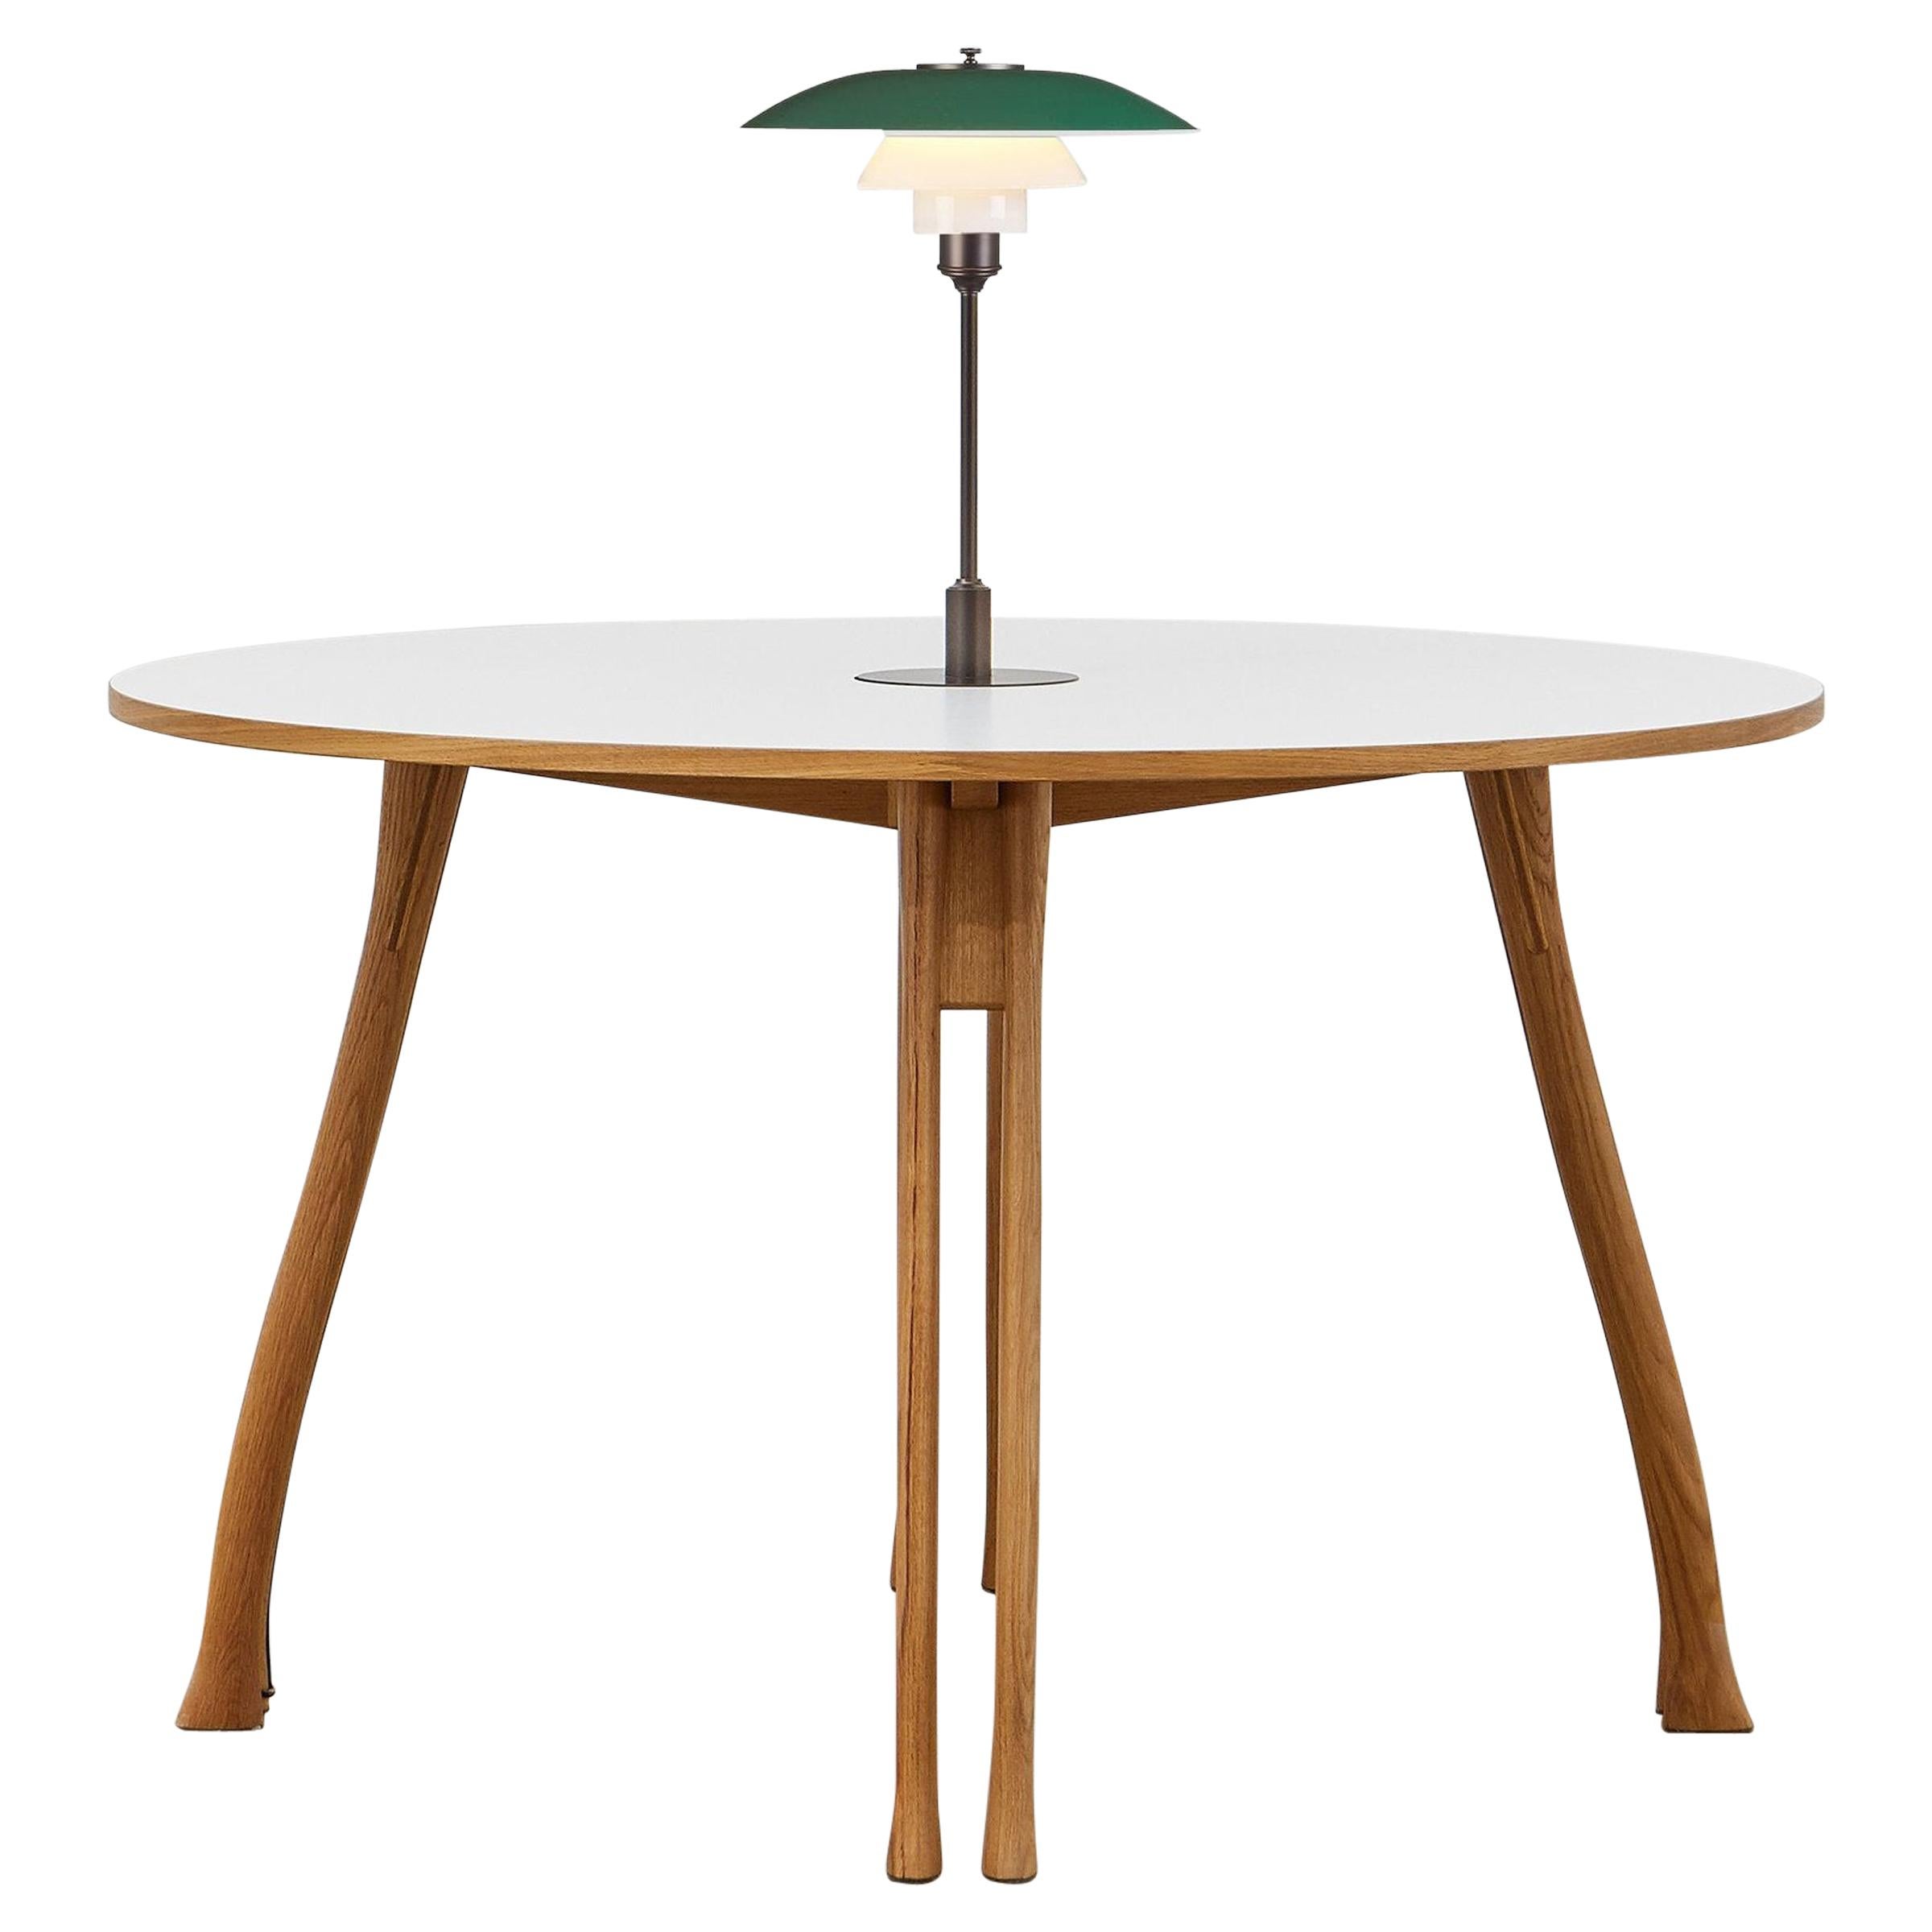 PH Axe Table, natural oak legs, laminated plate, green PH 3 ½ - 2 ½ lamp